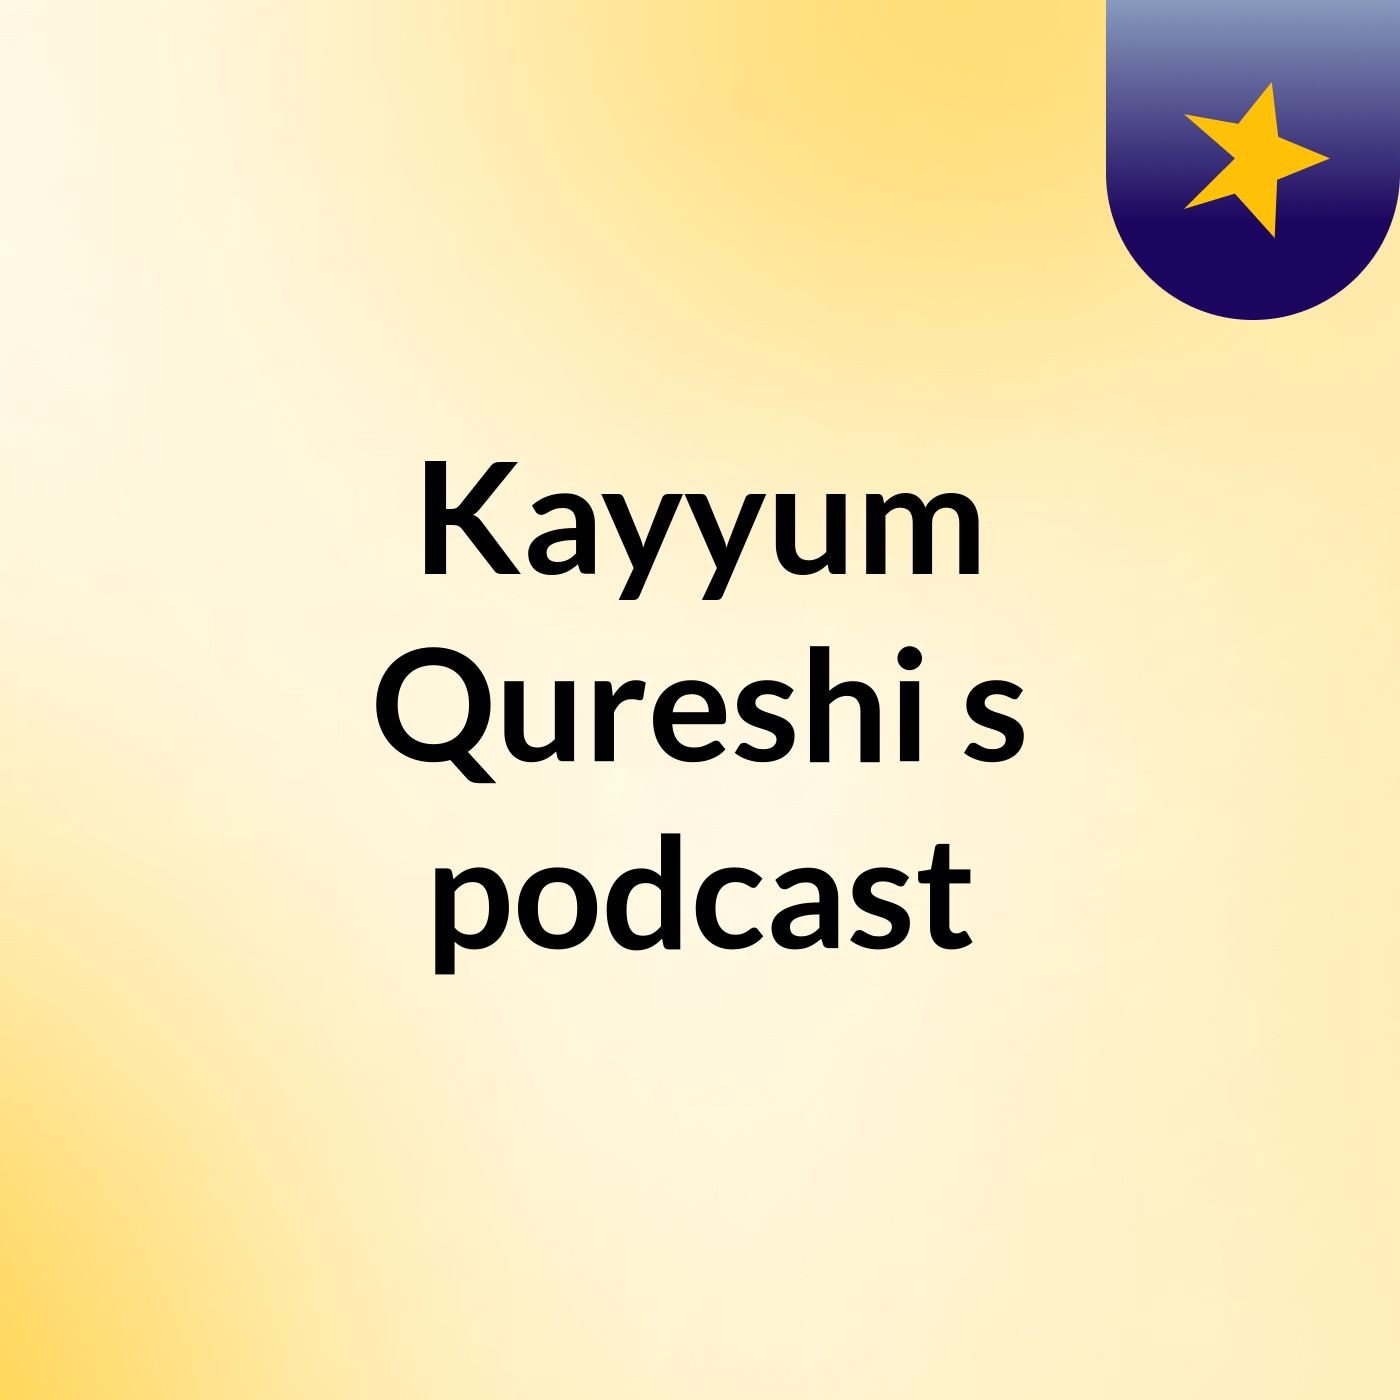 Kayyum Qureshi's podcast